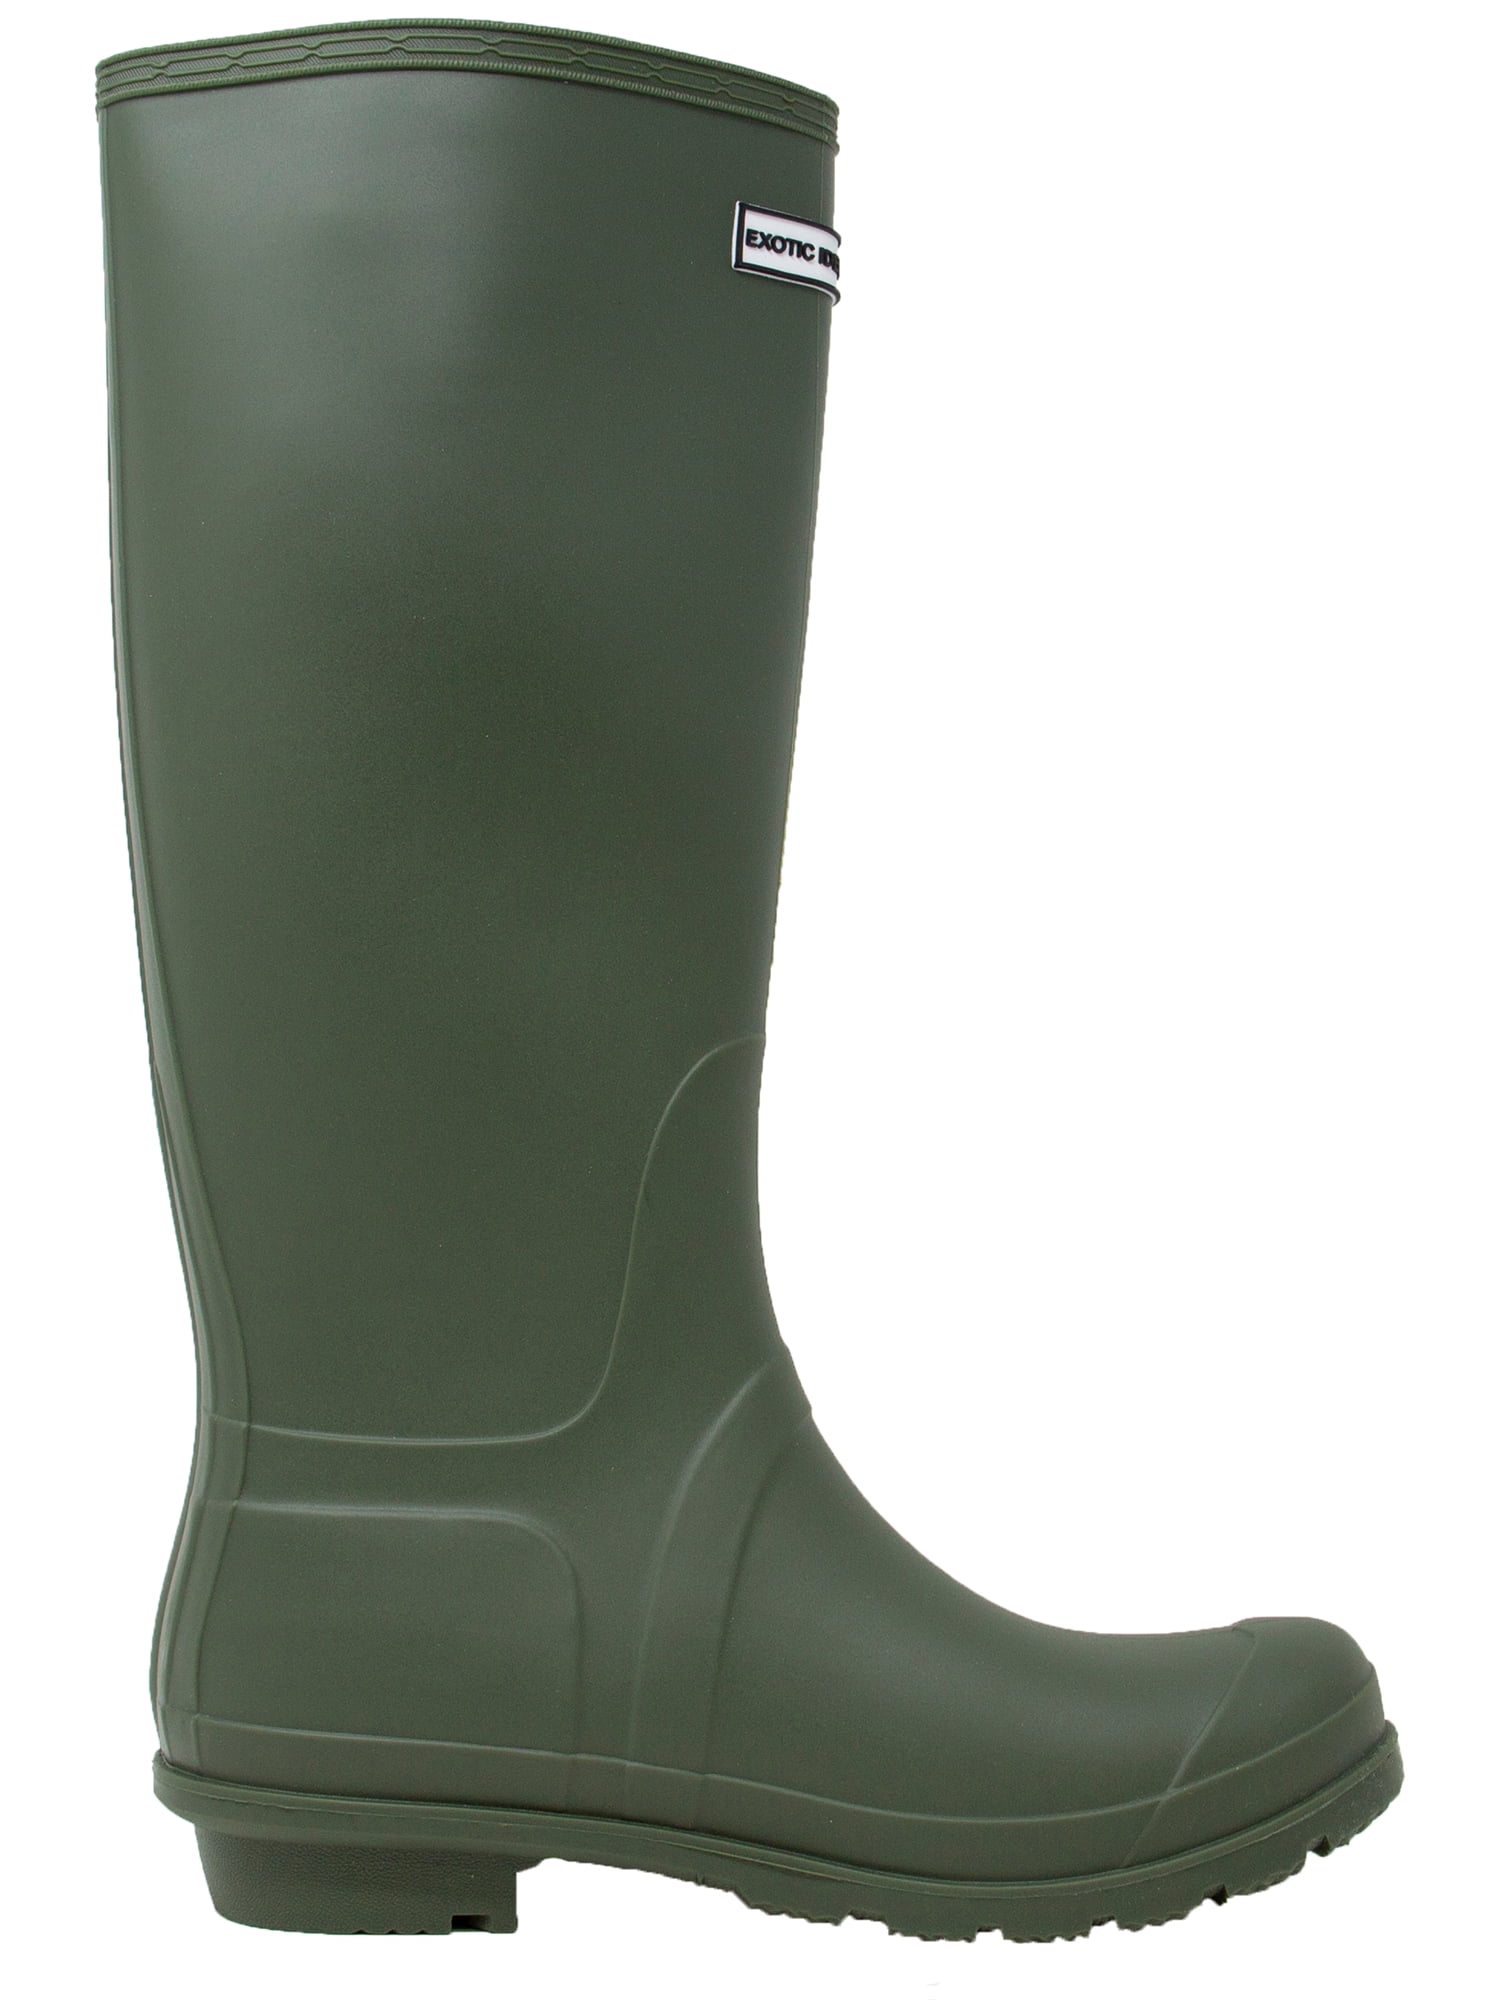 Exotic Identity Tall Rain Boots-Non-slip 100% Waterproof for Women ...